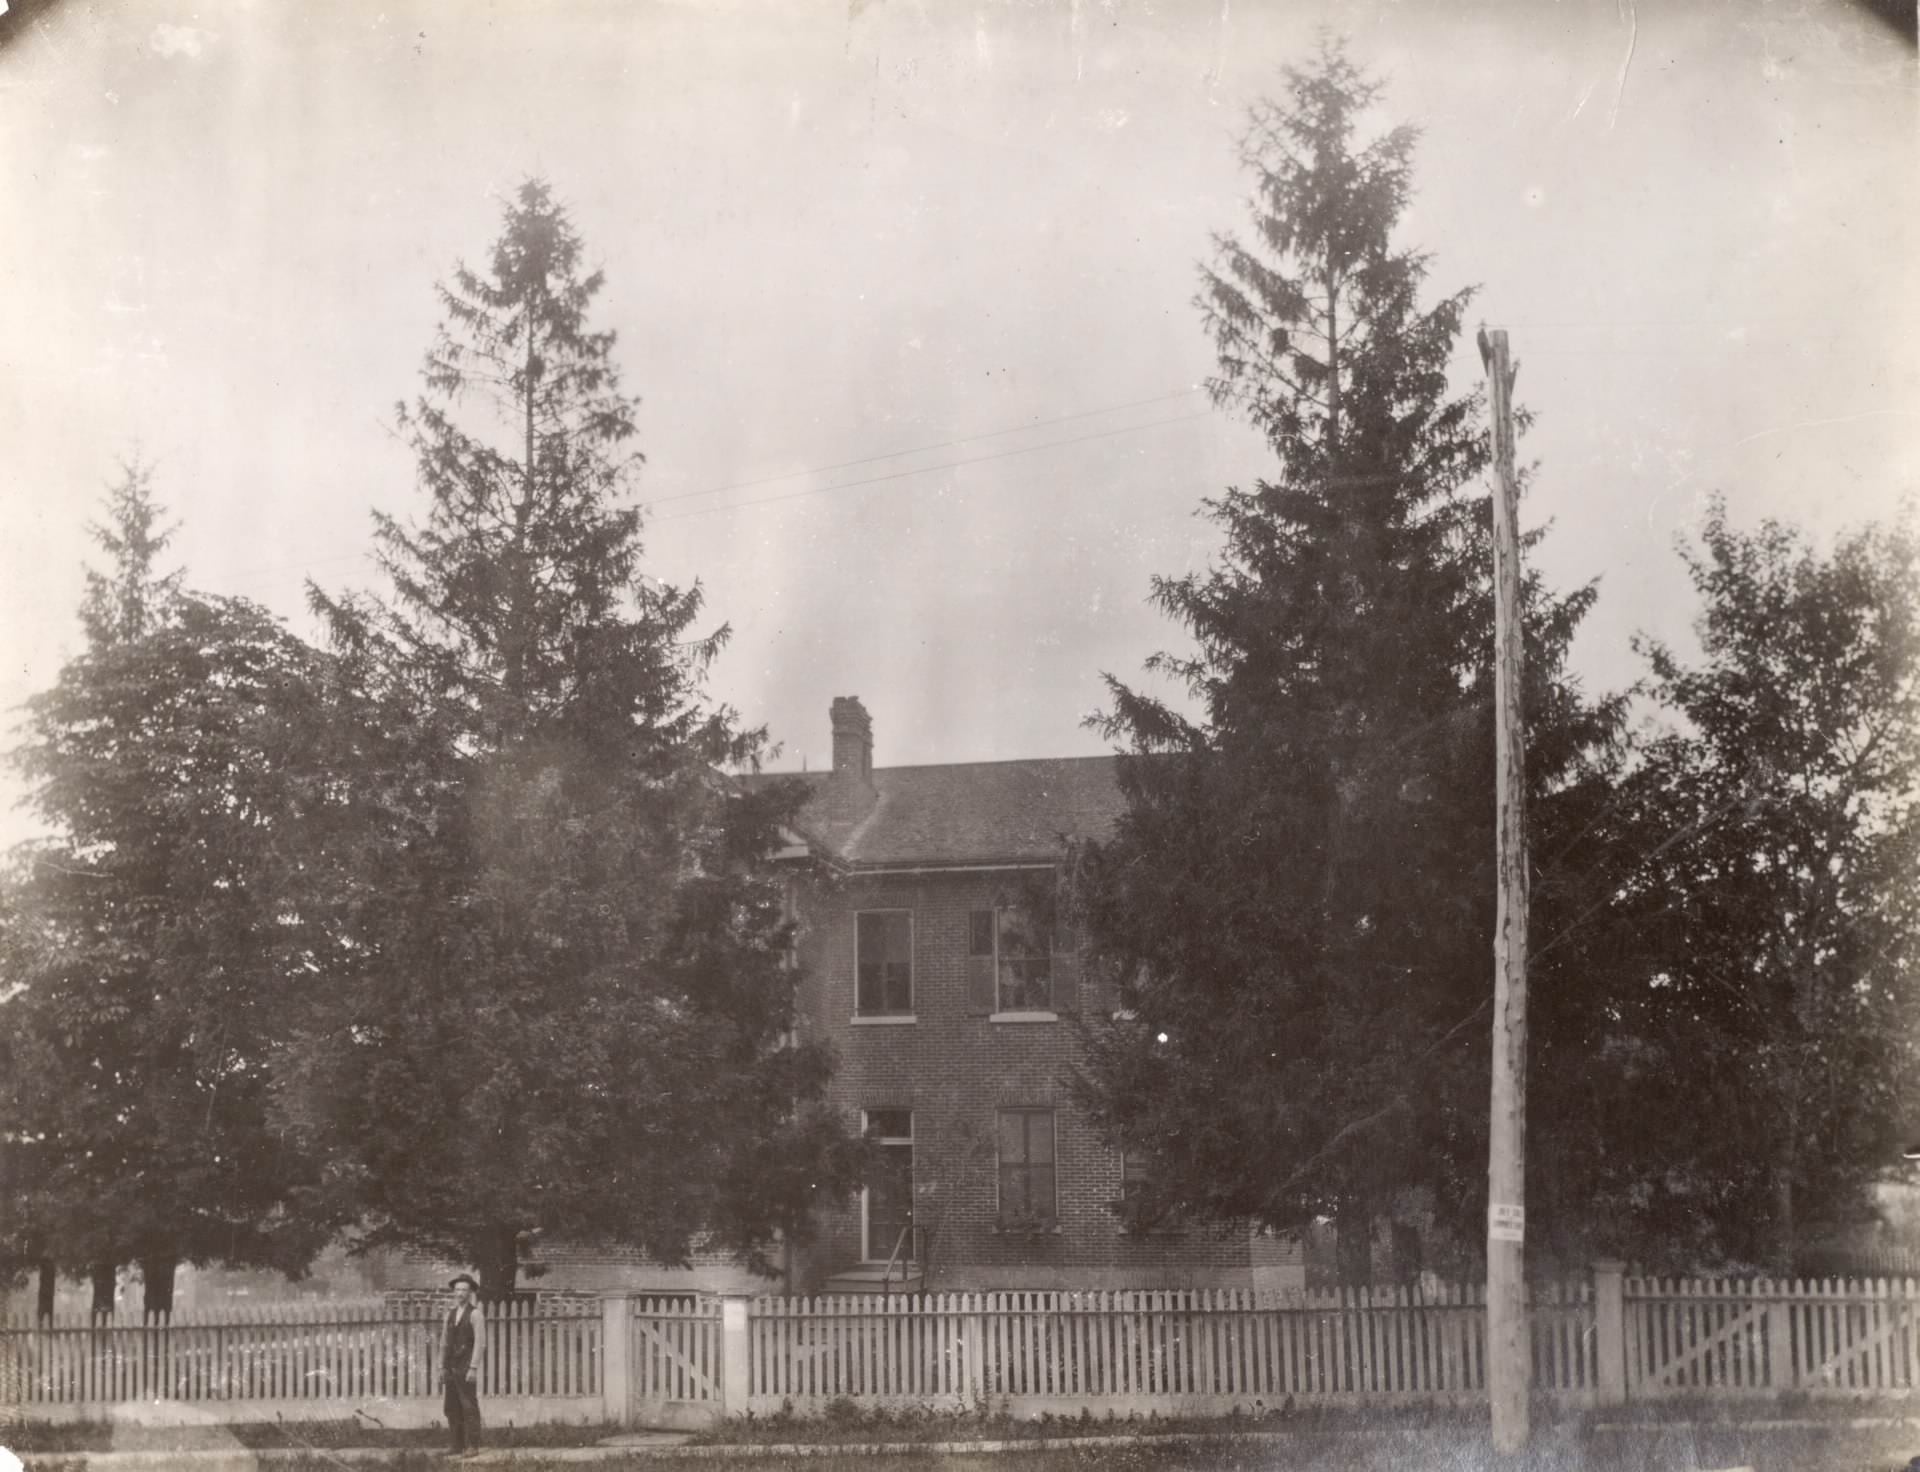 Weston High School, King St., south side, west of Elm St. Toronto, 1905.